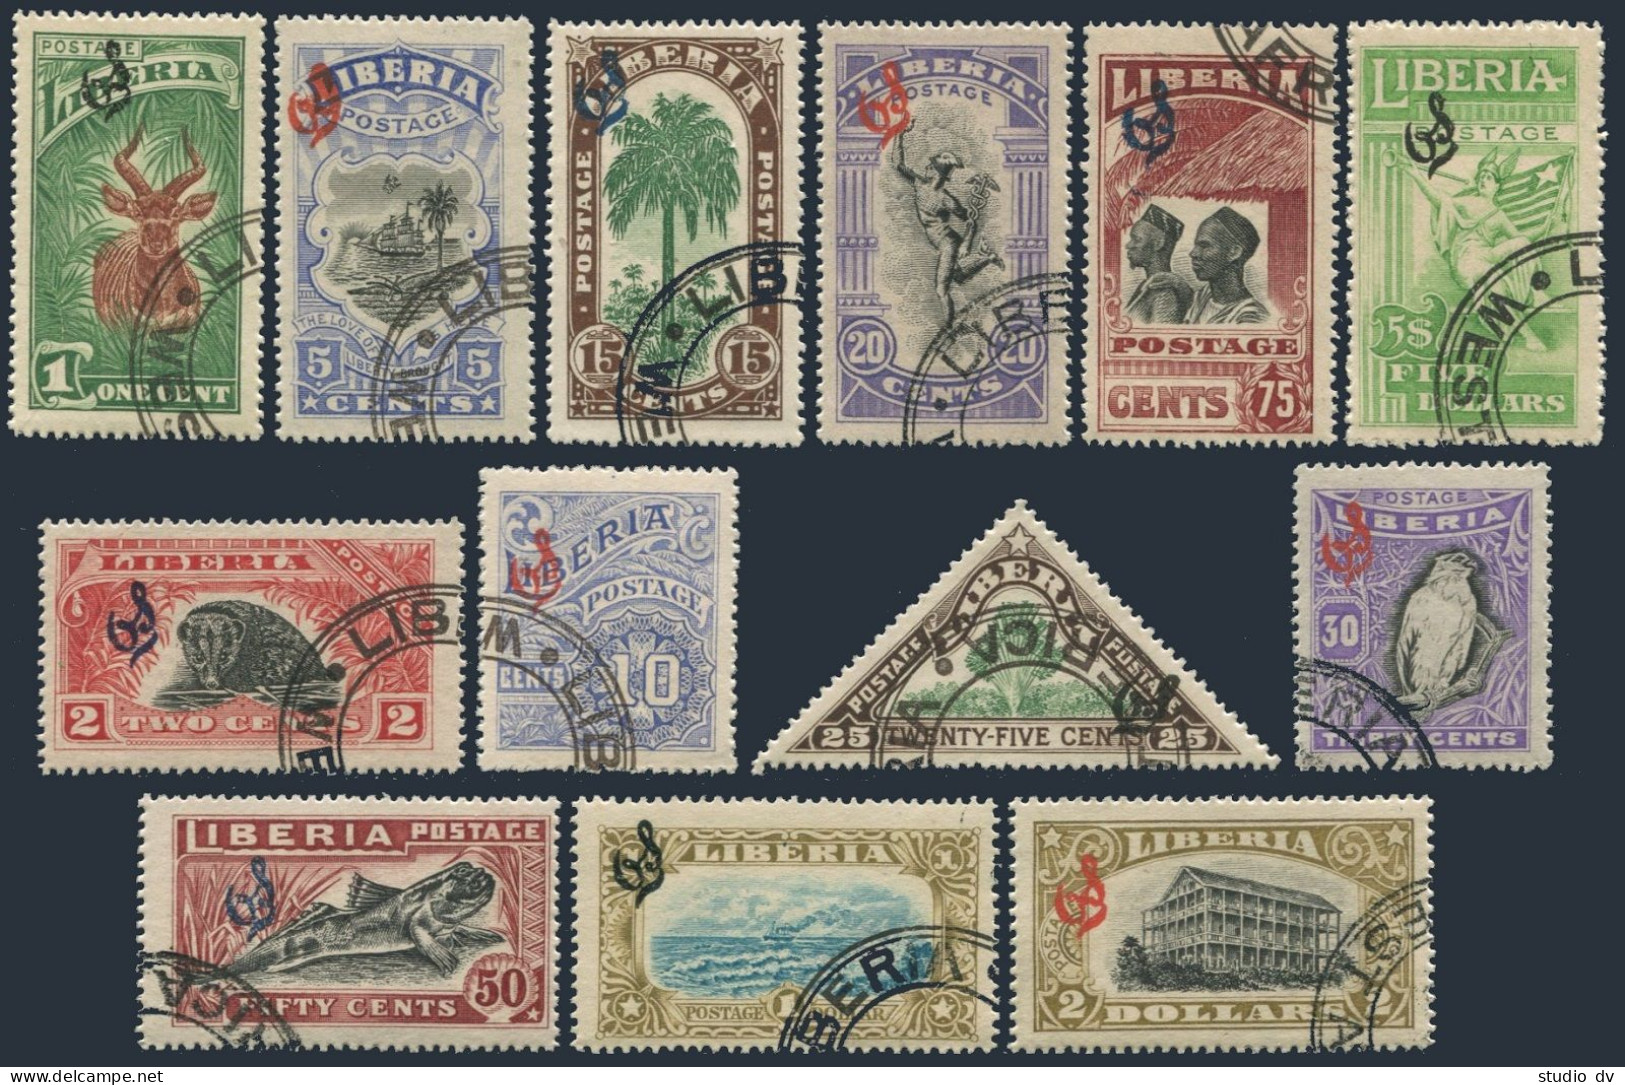 Liberia O98-O110,CTO.Mi D92-D104. Antelope,Palm Civet,Vulture,Fish,Mercury,1918. - Liberia